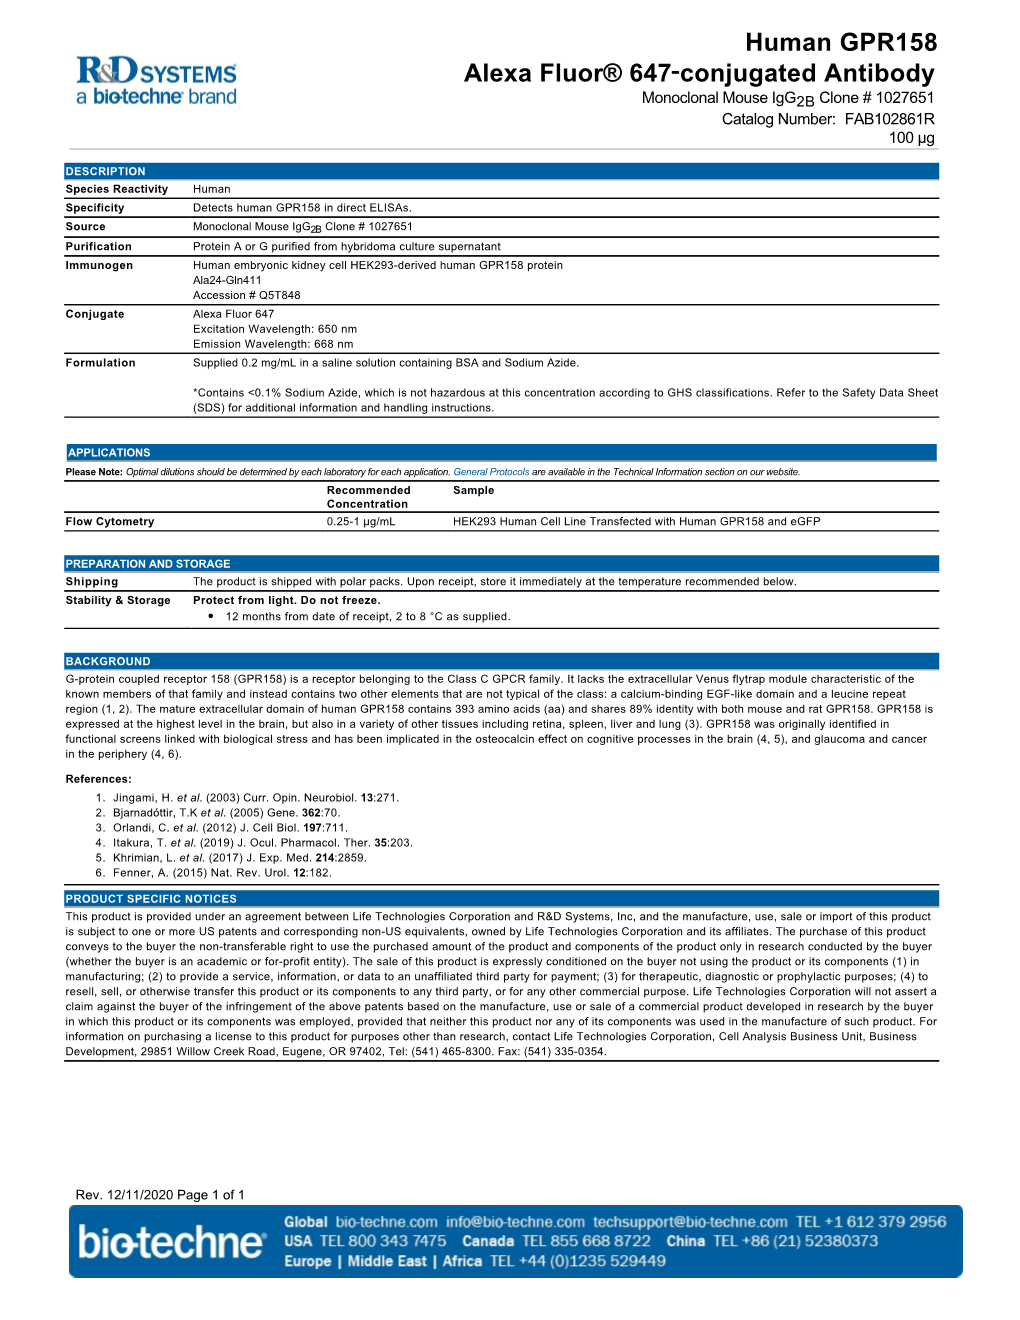 Human GPR158 Alexa Fluor® 647‑Conjugated Antibody